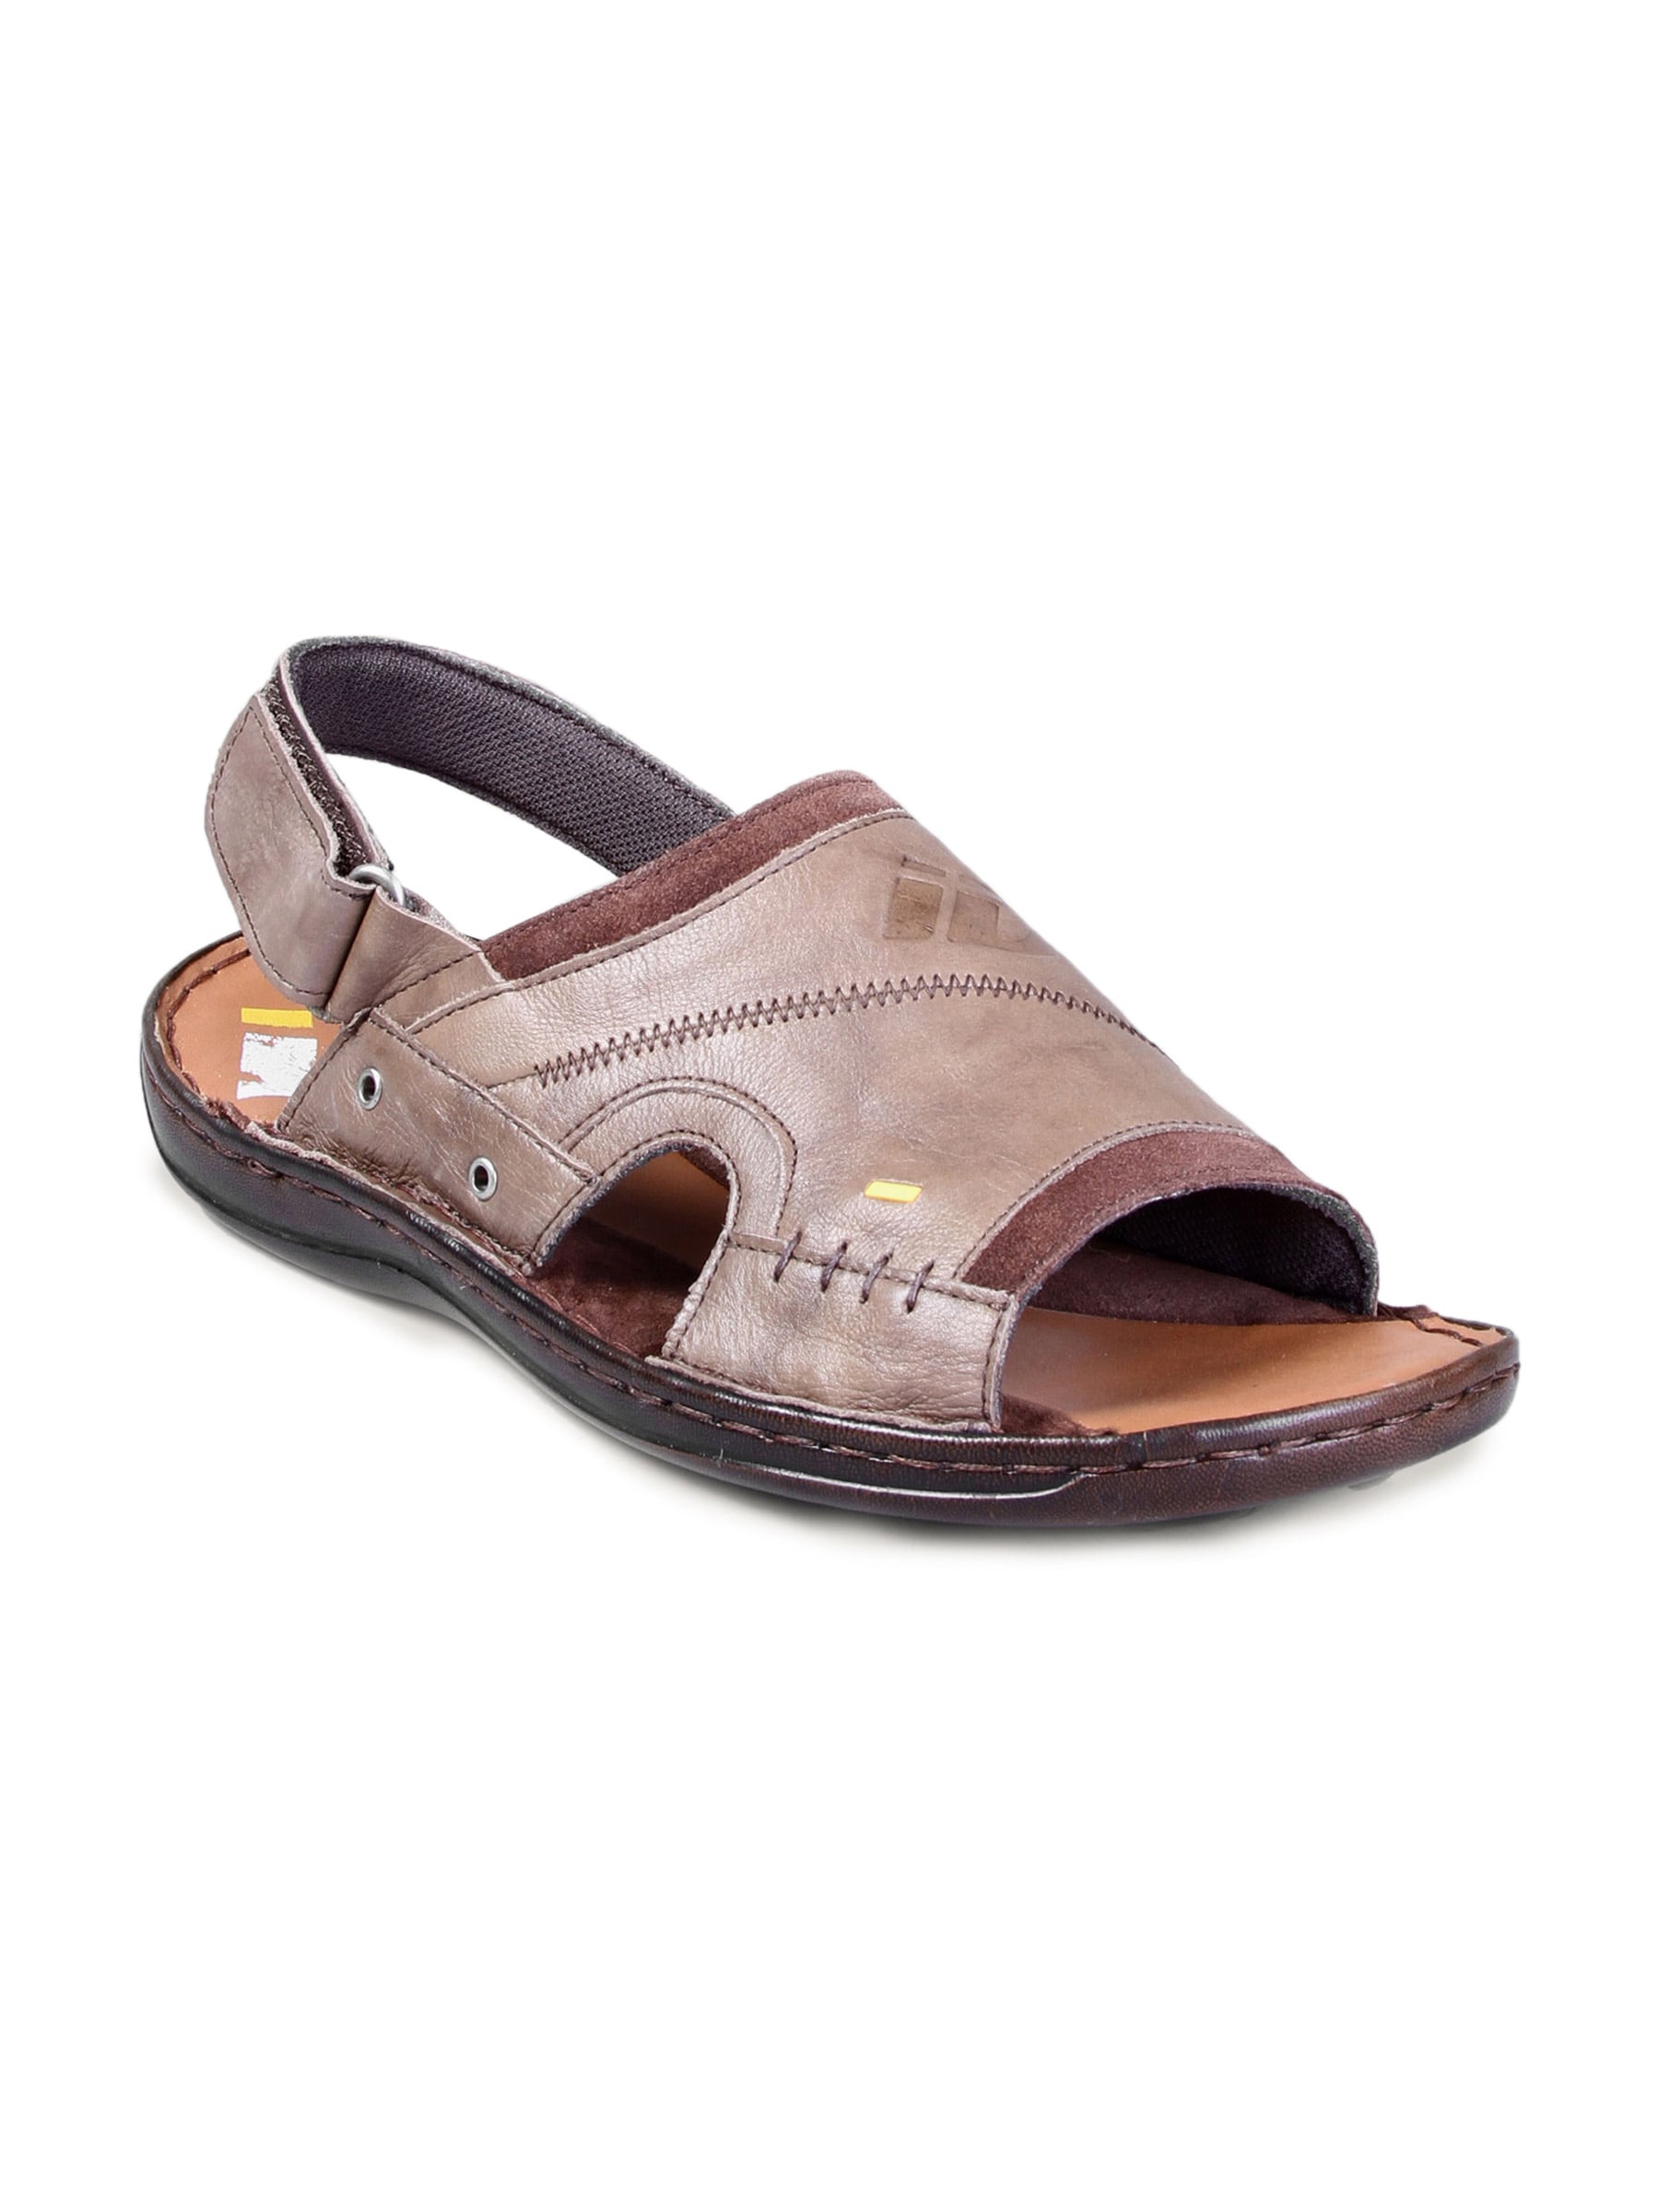 iD Men Casual Leather/Felt Beige Sandal